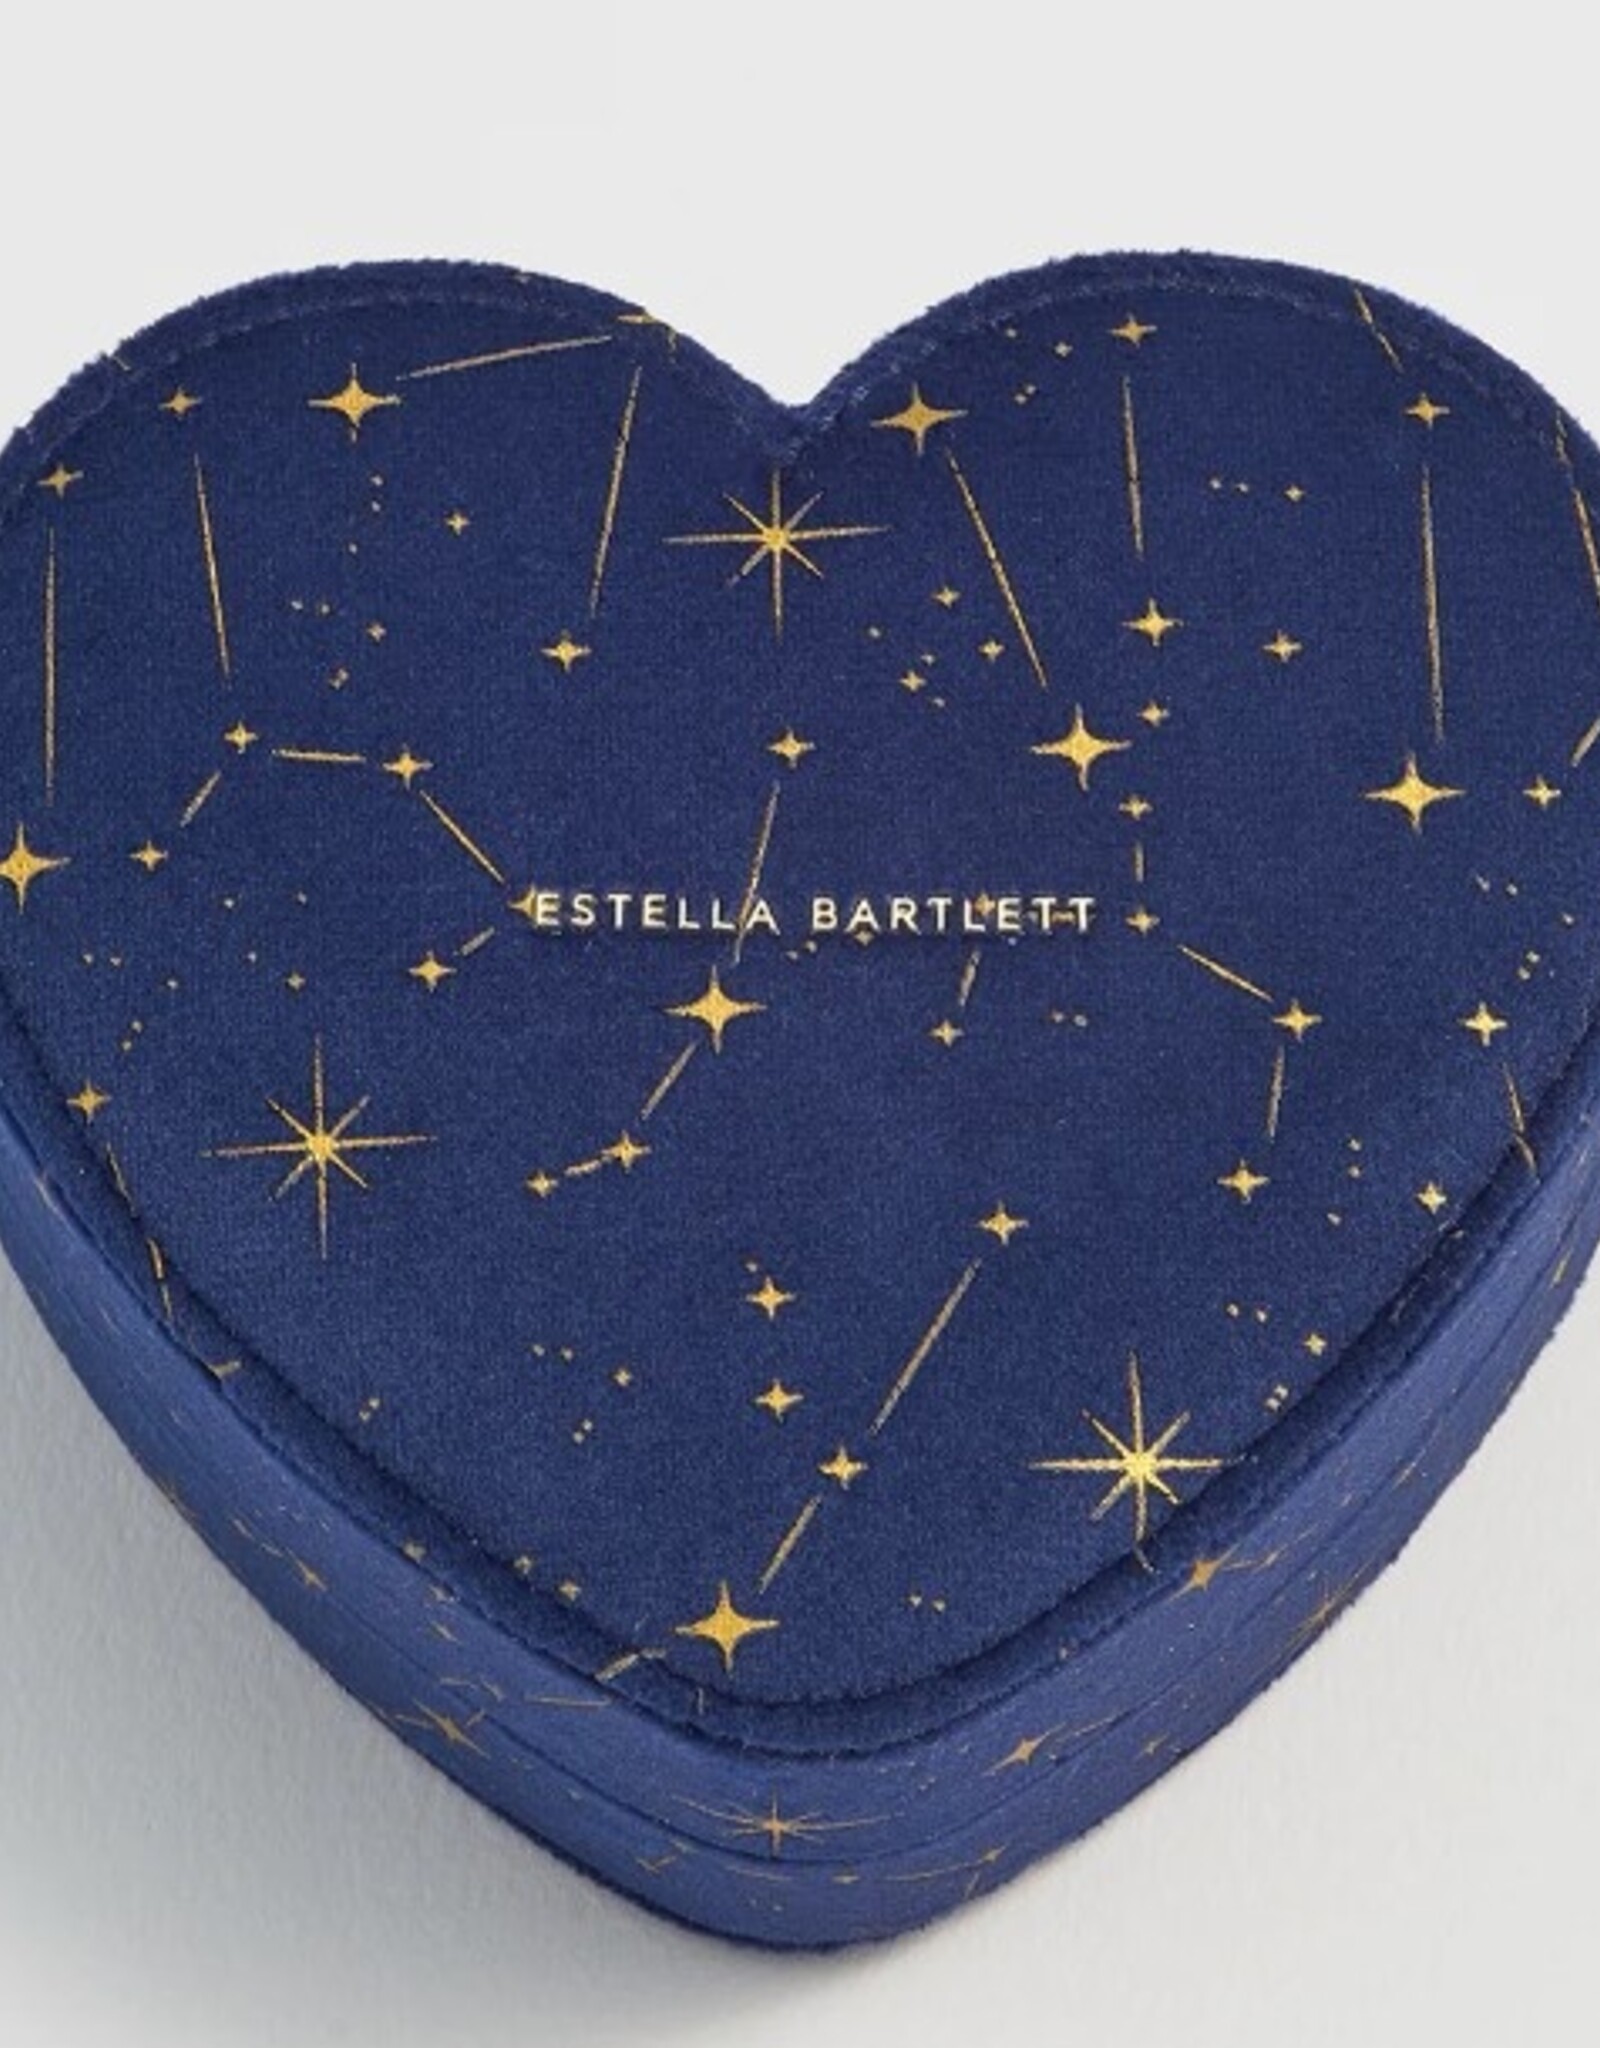 Estella Bartlett Heart Jewelry Box - Celestial Navy